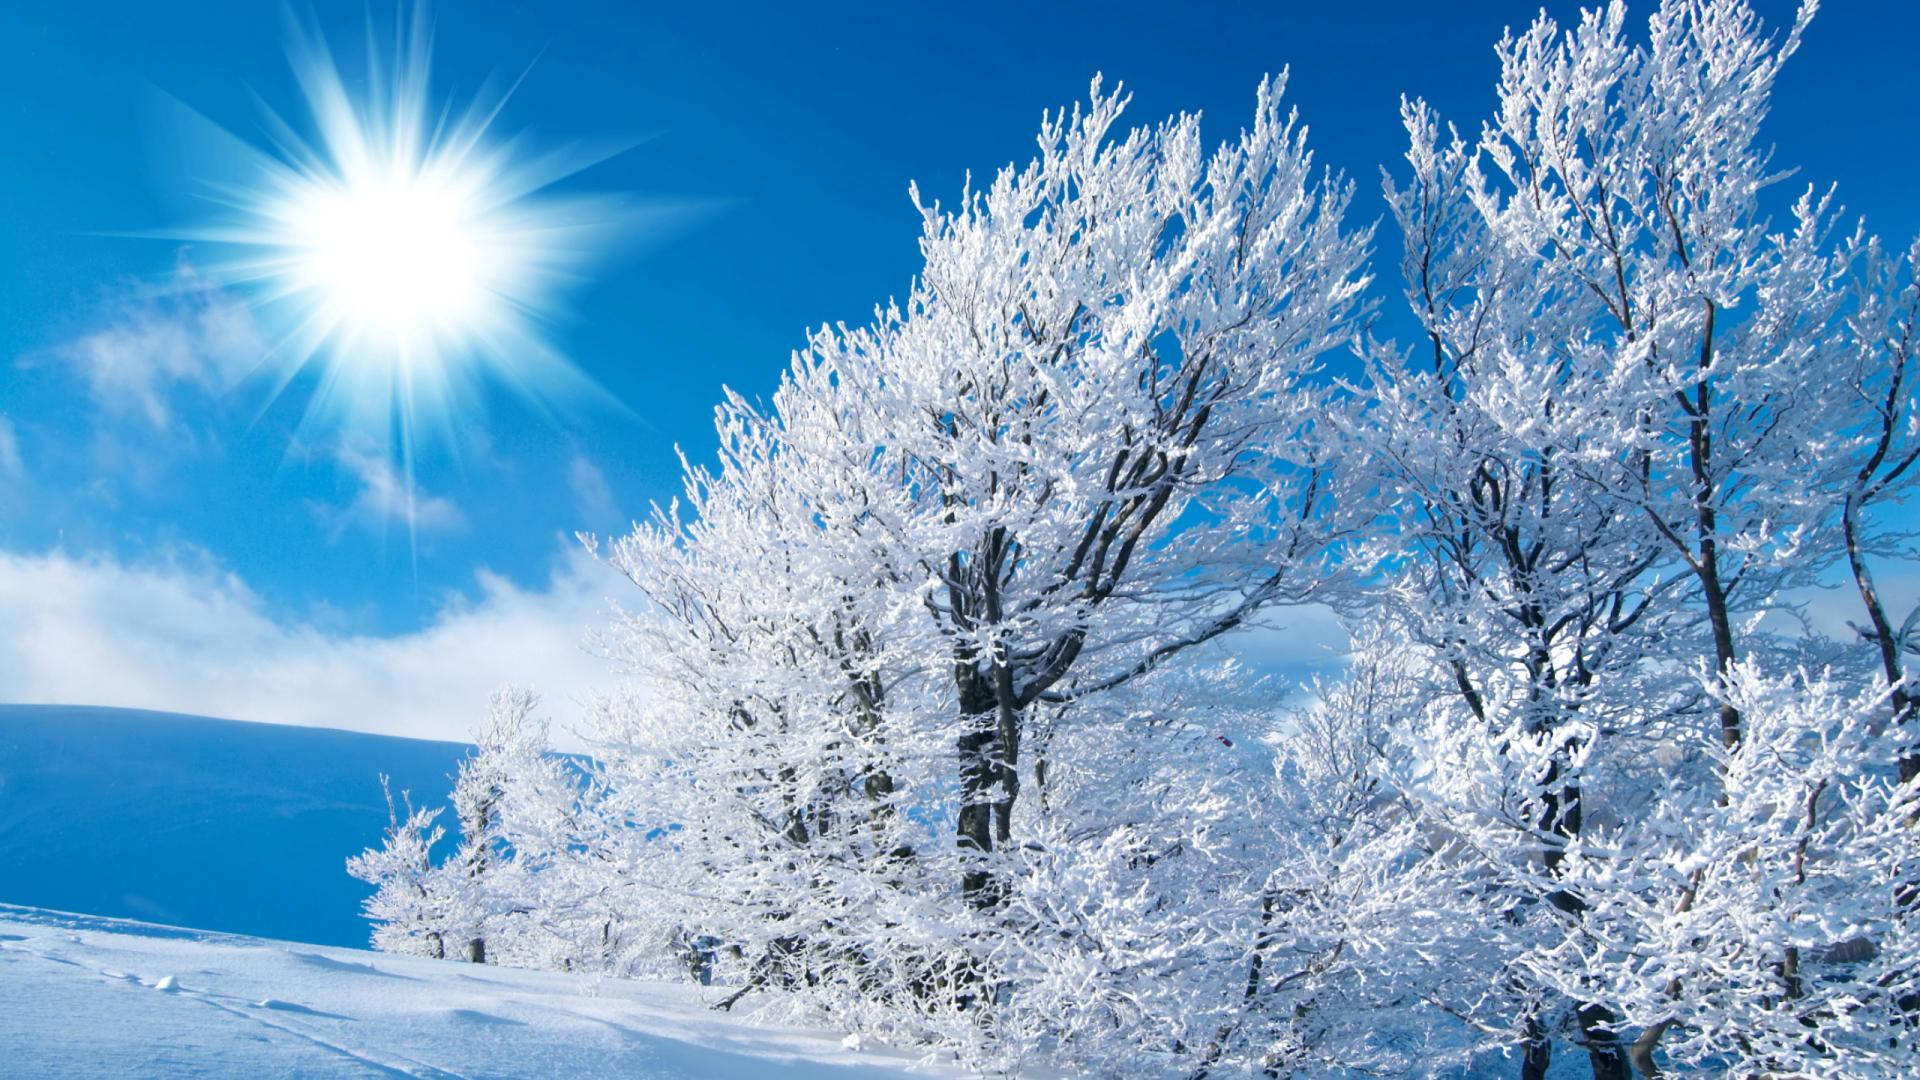 Winter Trees And Sunlight Wallpaper